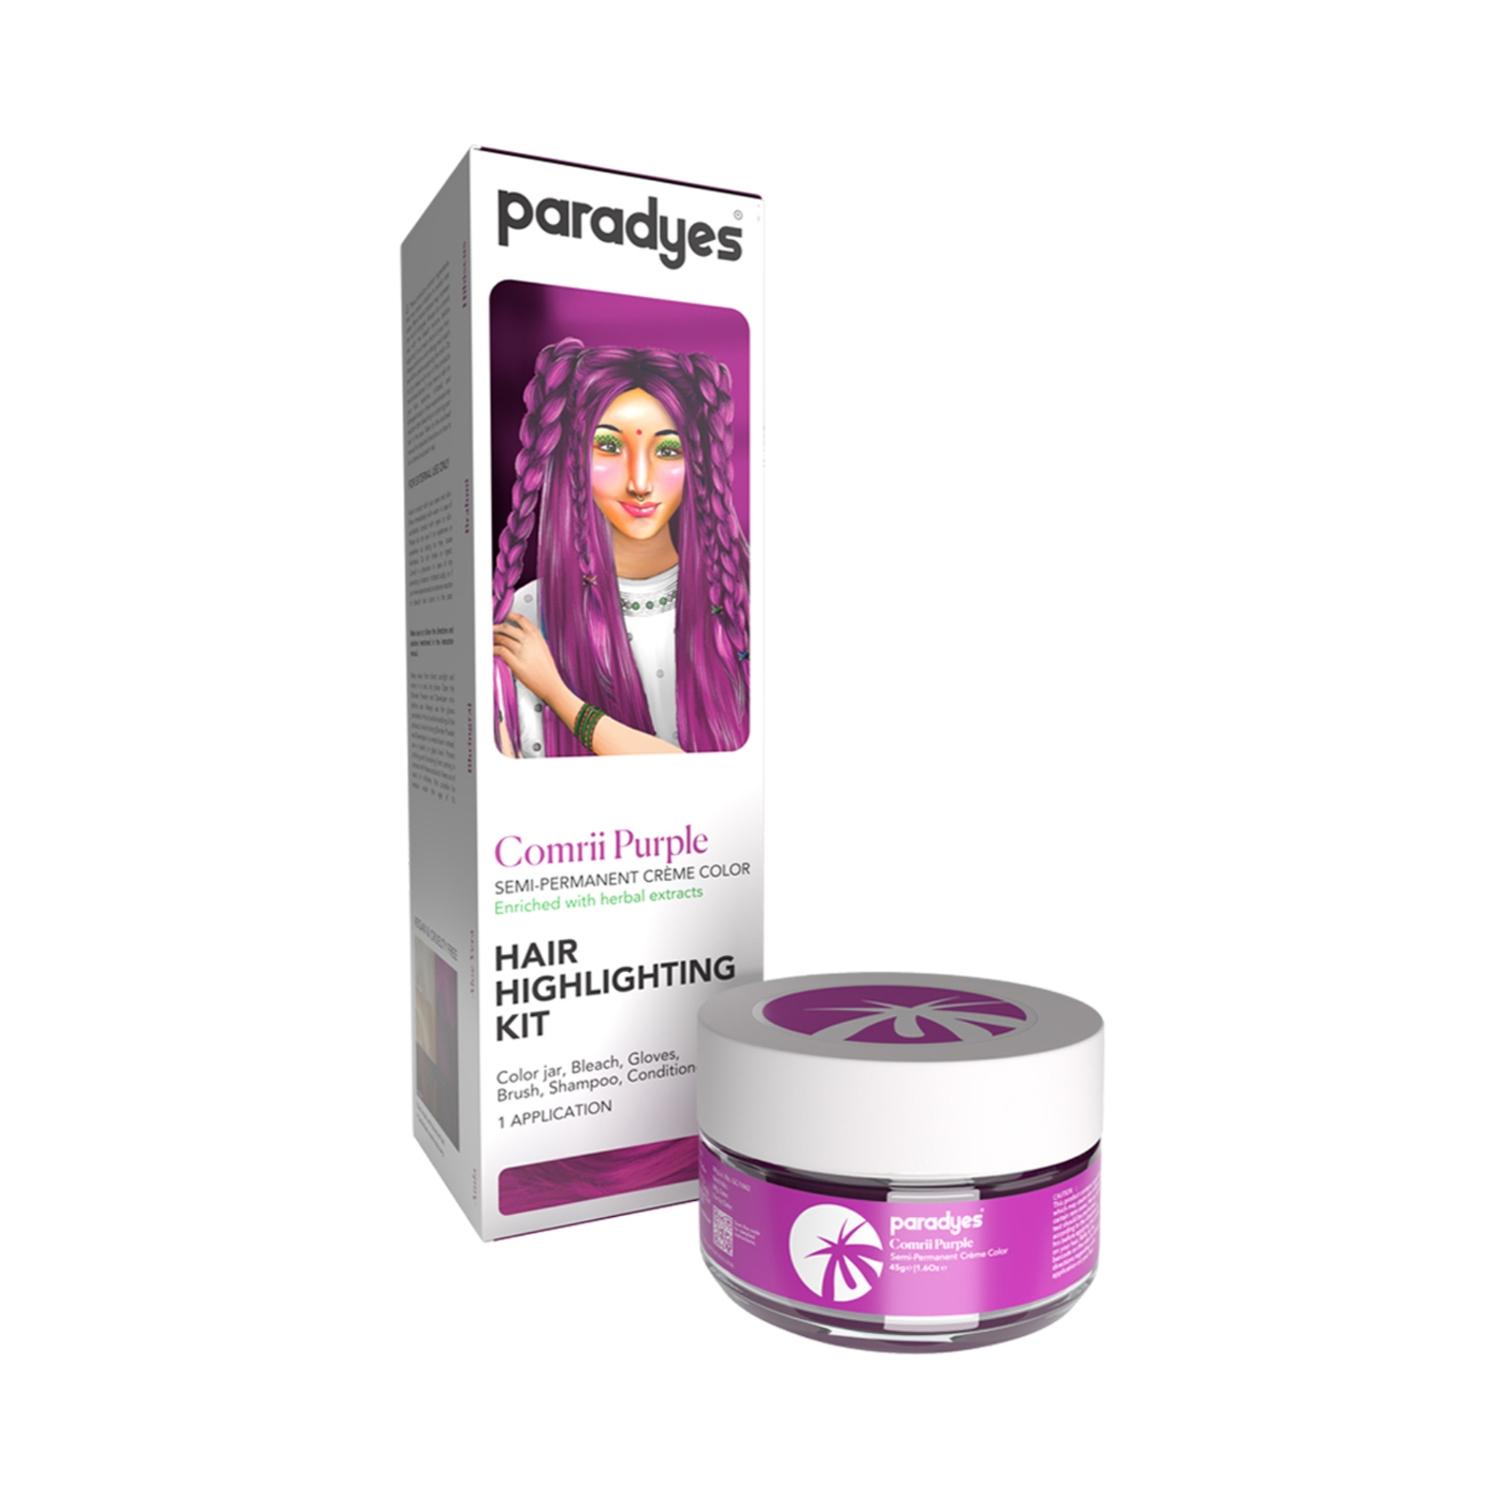 paradyes hair highlighting kit - comrii purple (100g)